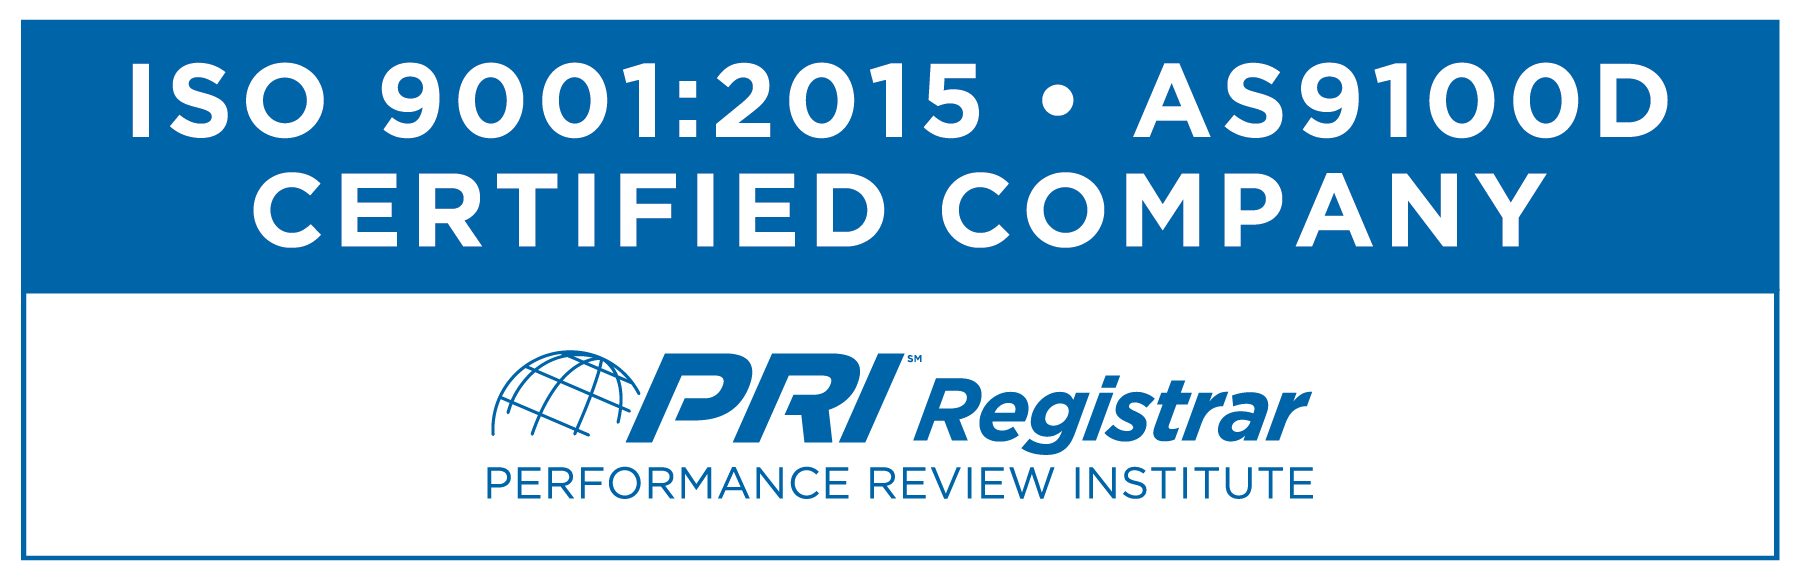 PRI_Programs_Registrar_Certified_ISO9001AS9100D_4c